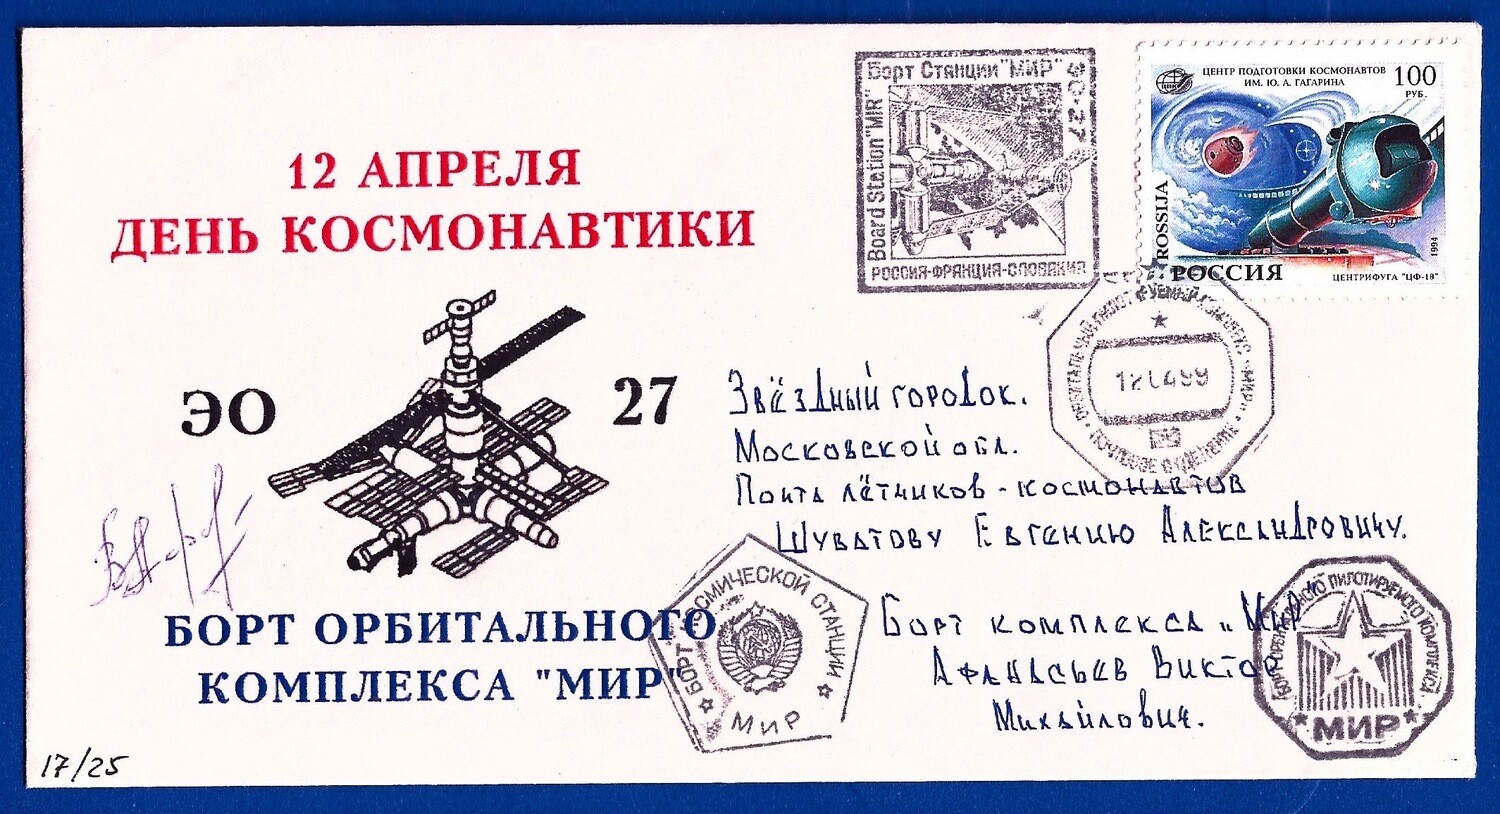 1999 Viktor Afanasyev signed MIR flown cover